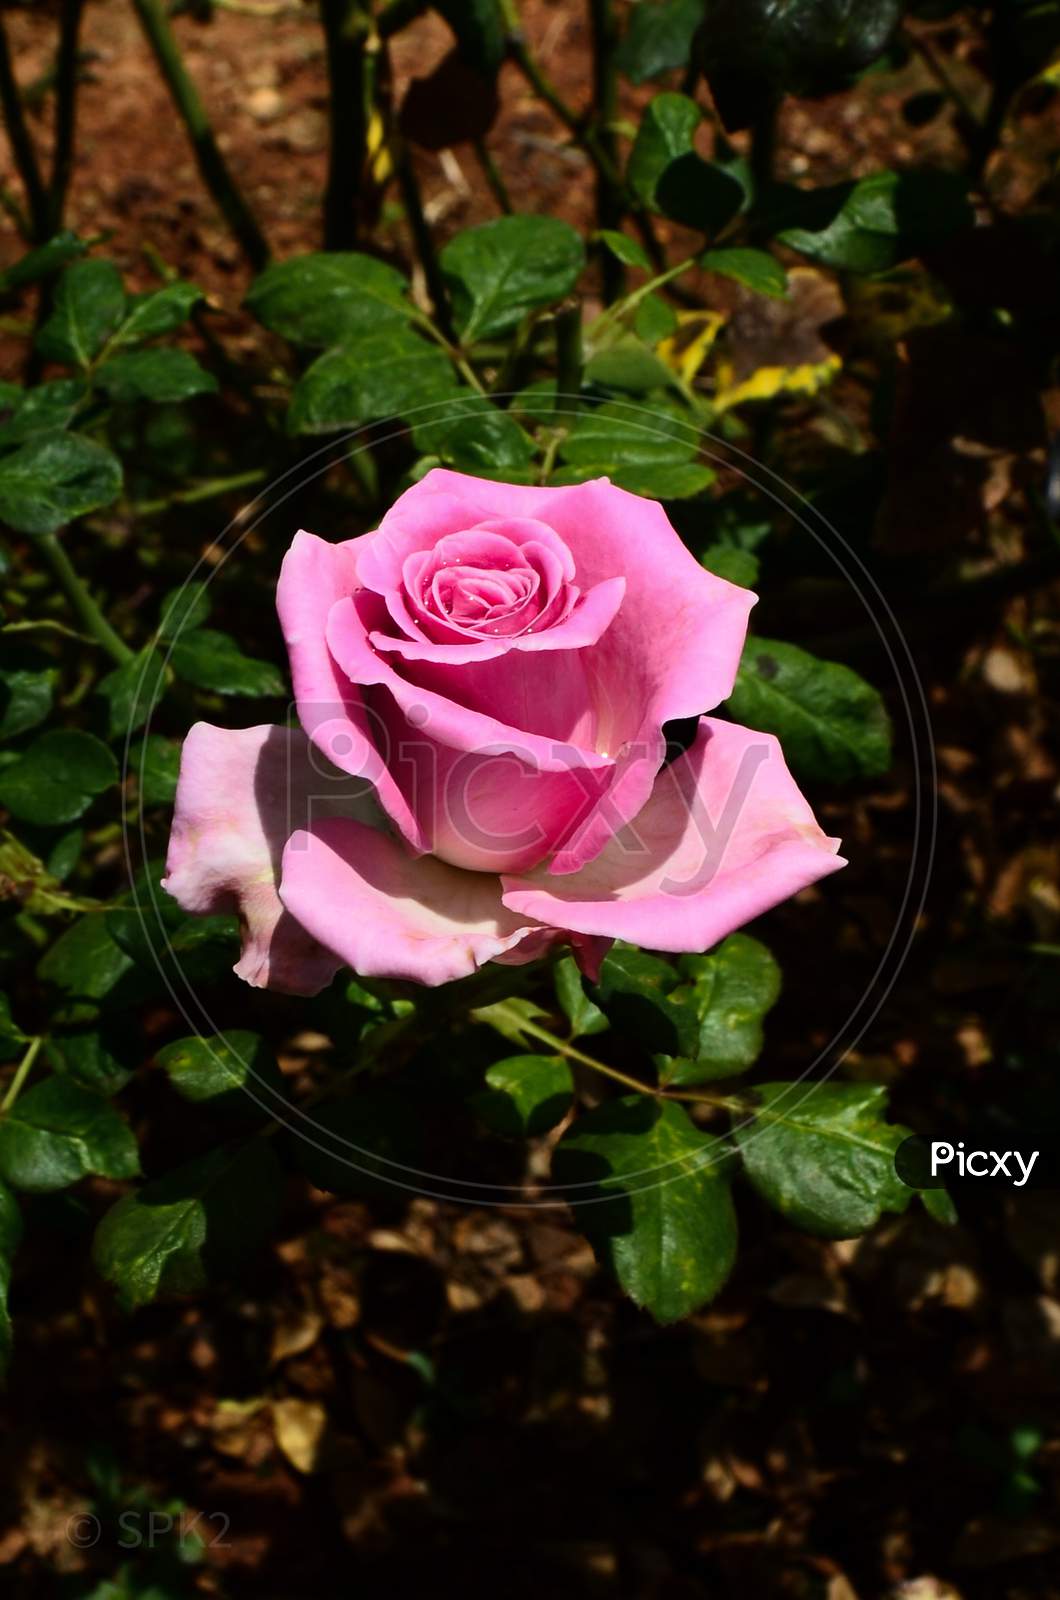 A single Pink rose